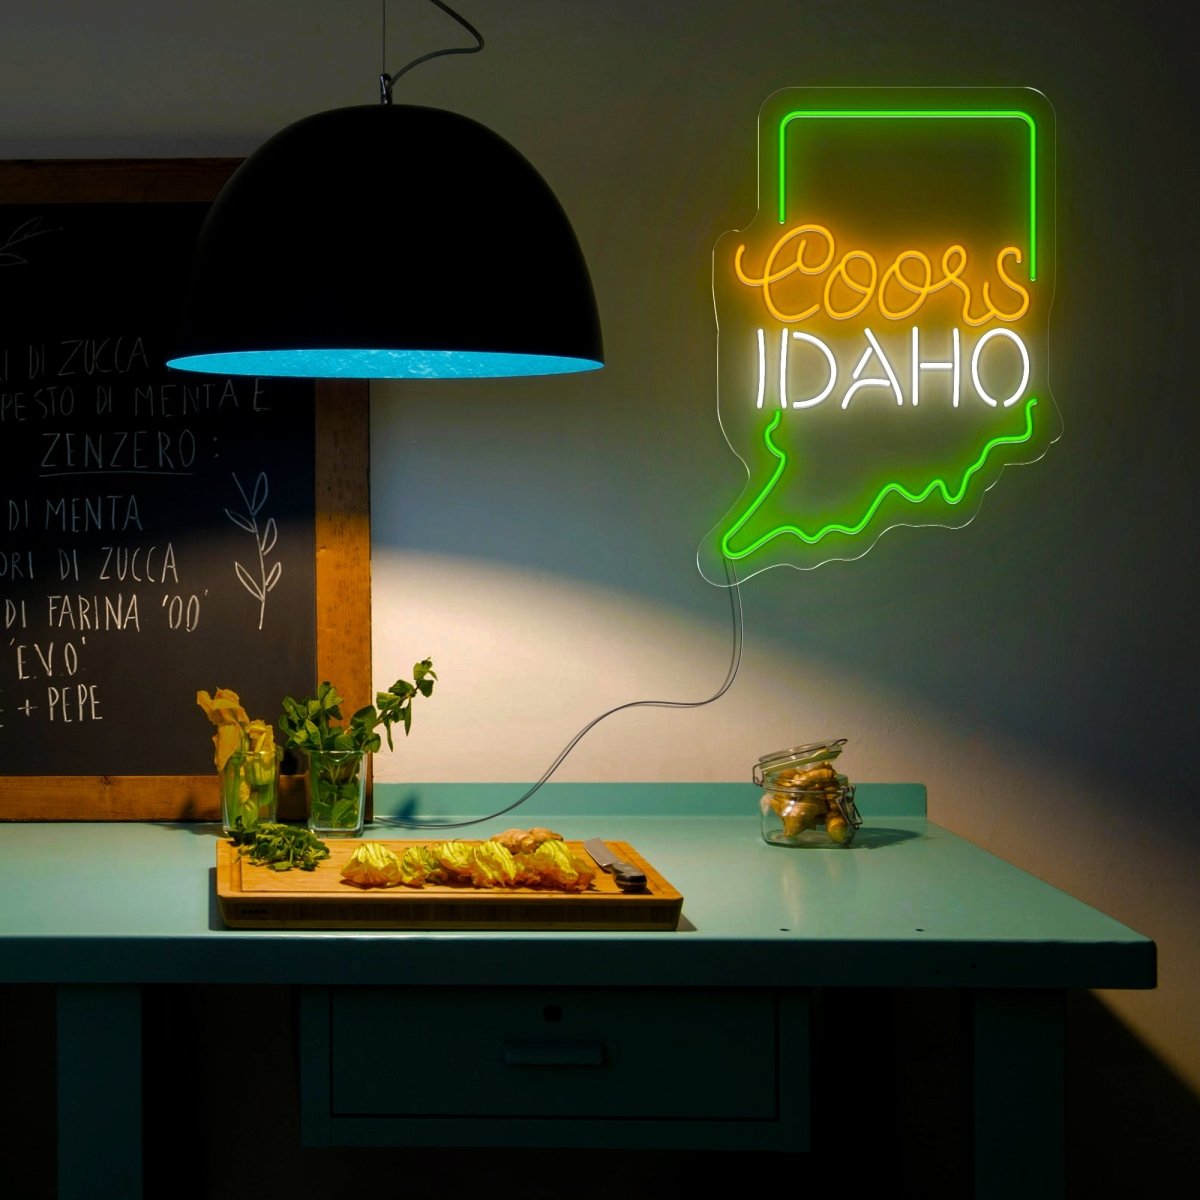 Coors American Idaho Maps Neon Sign - Reels Custom